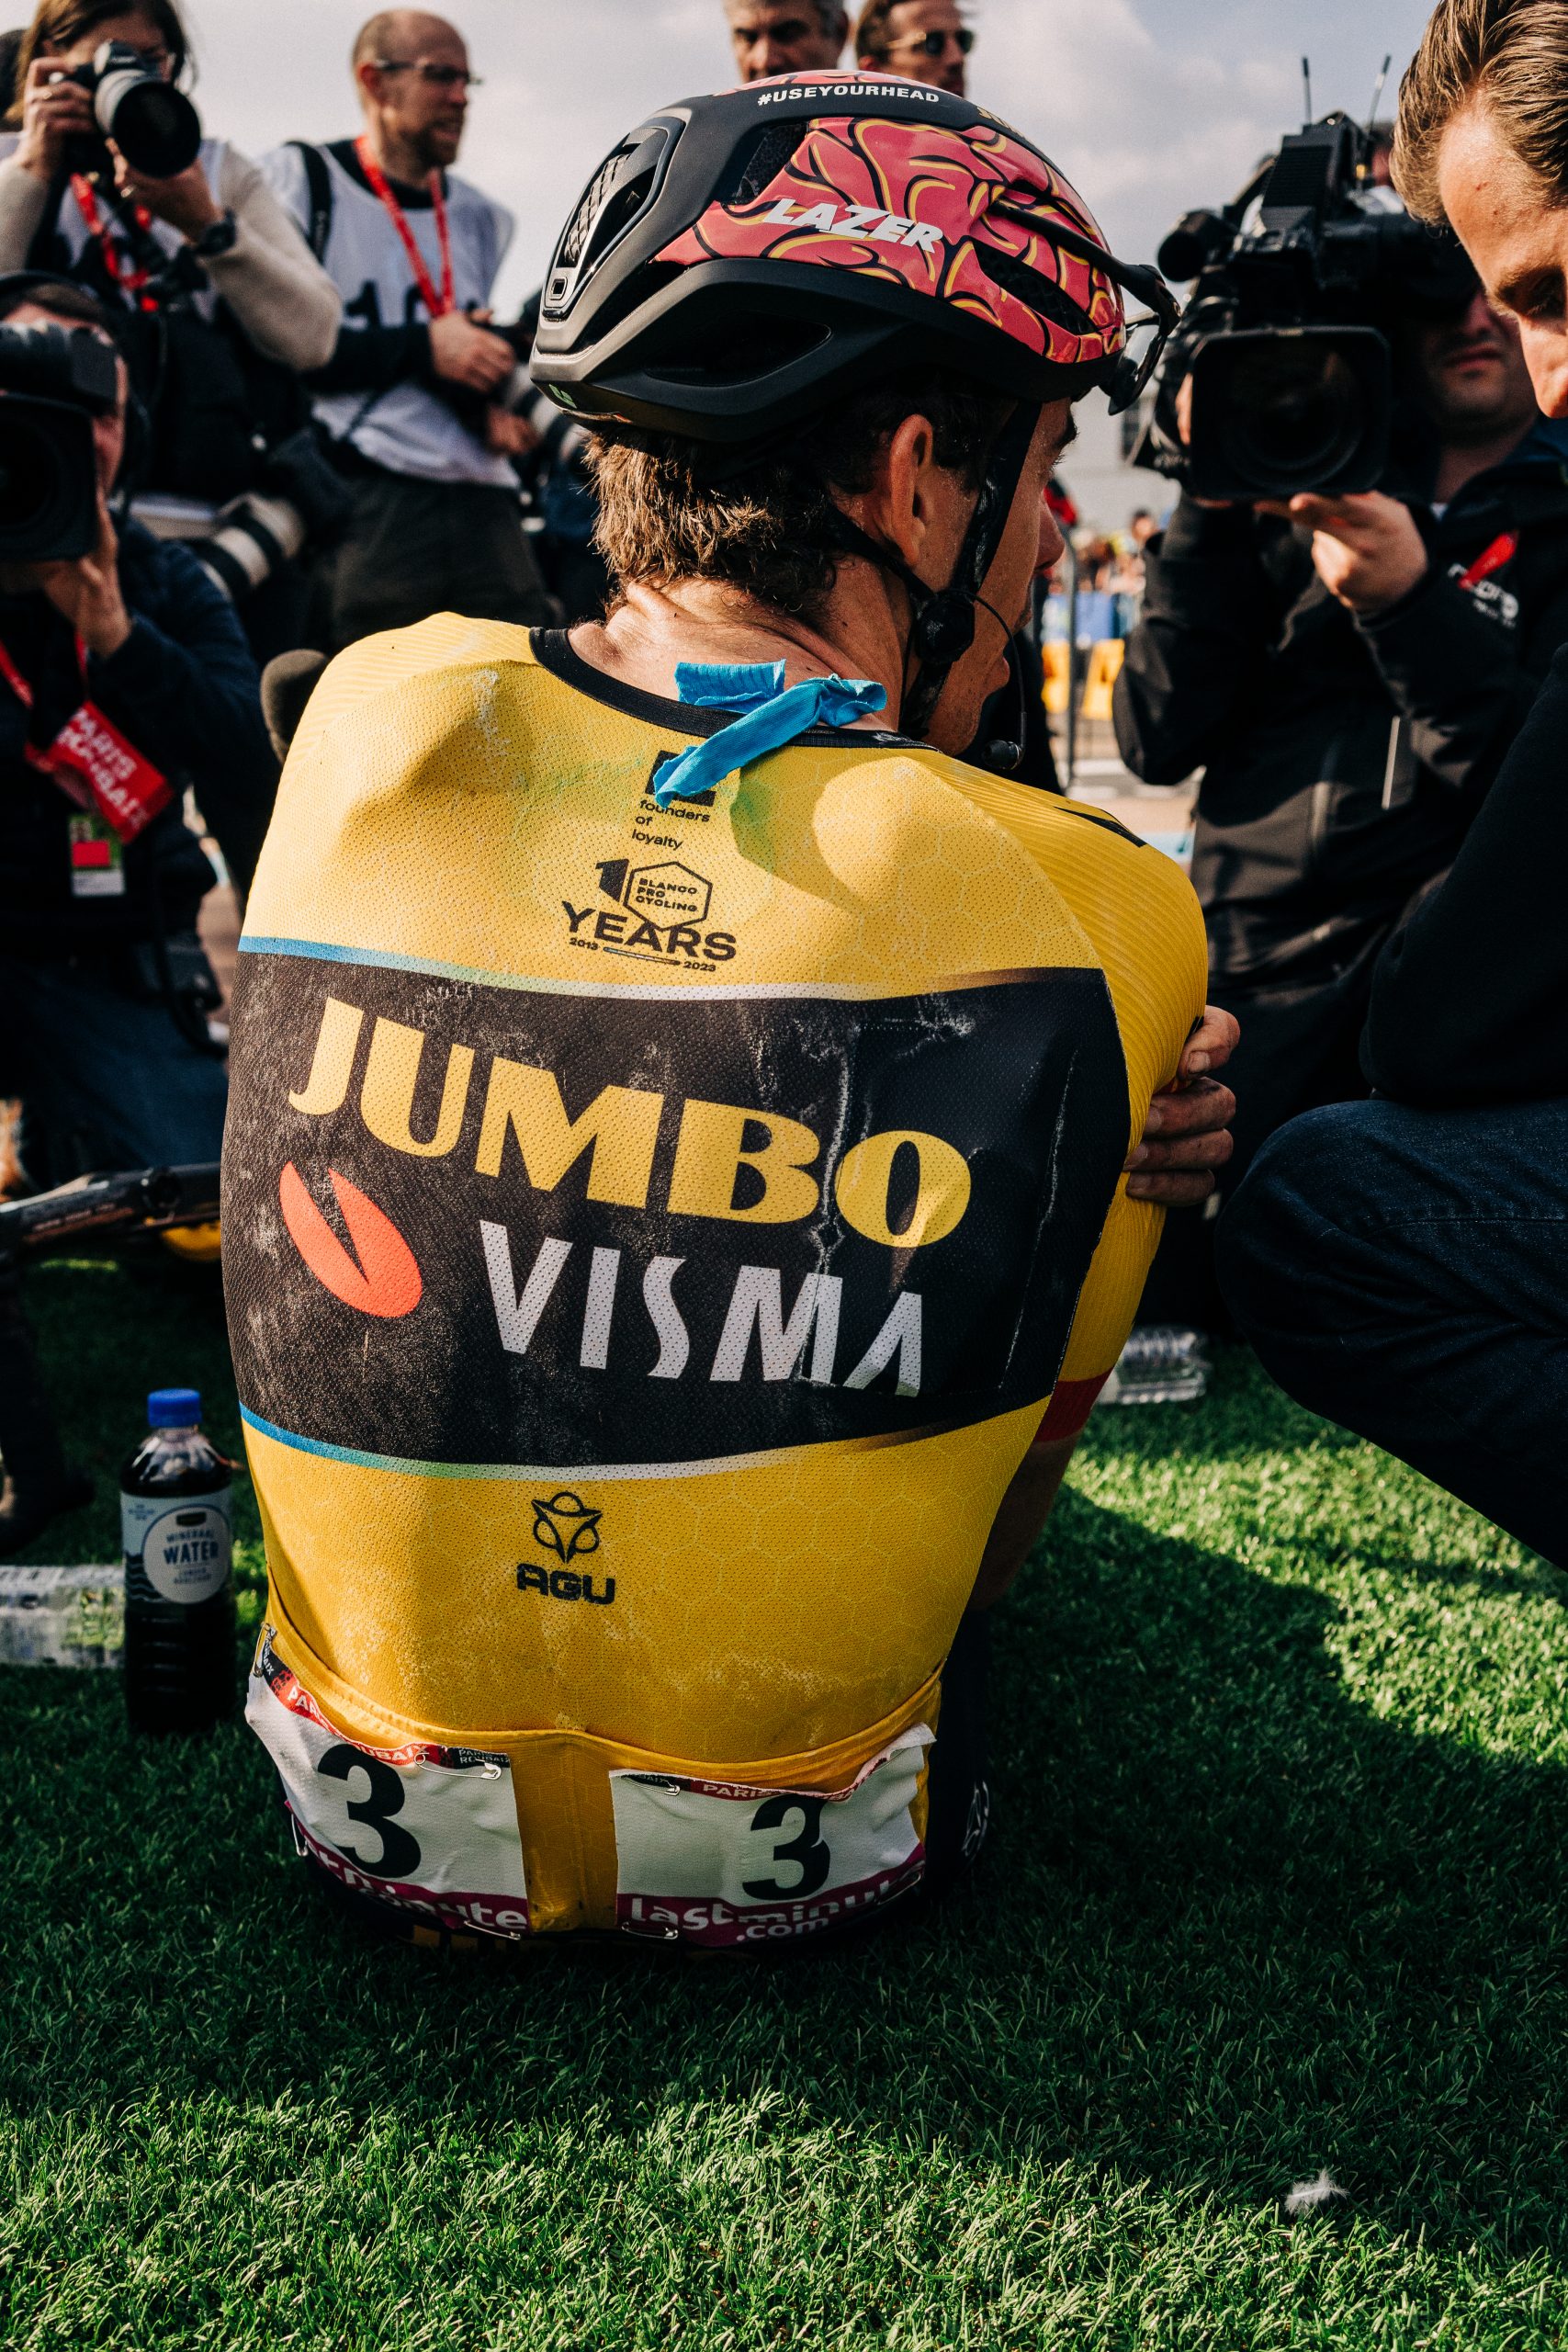 Jumbo Visma rider at Paris-Roubaix